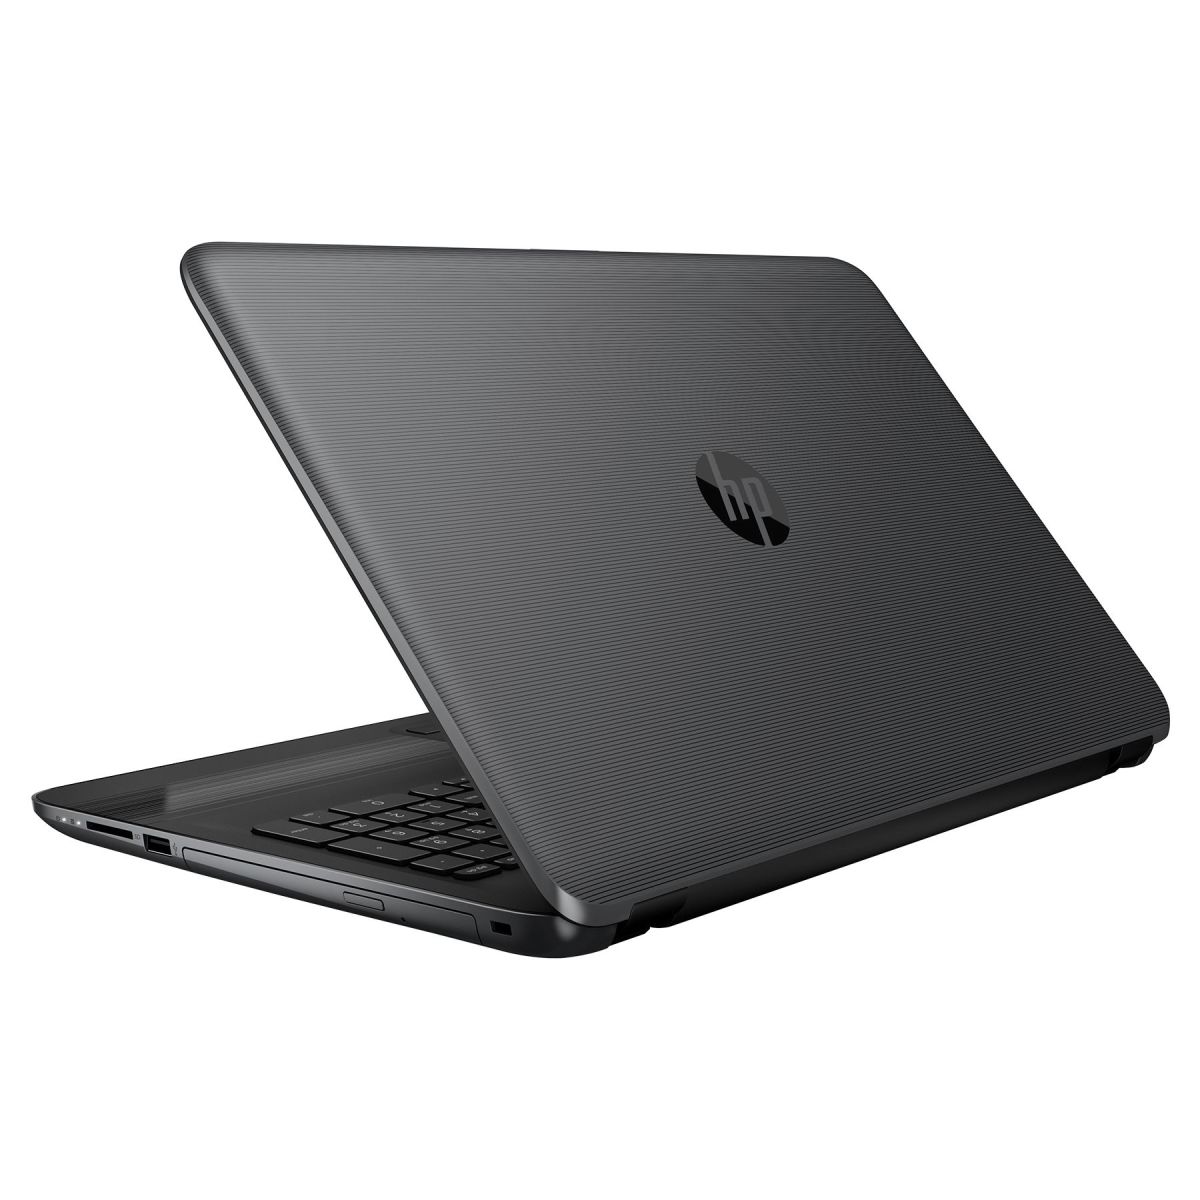 Lima verlegen Getand HP 255 G5 - 1TT28ES laptop specifications